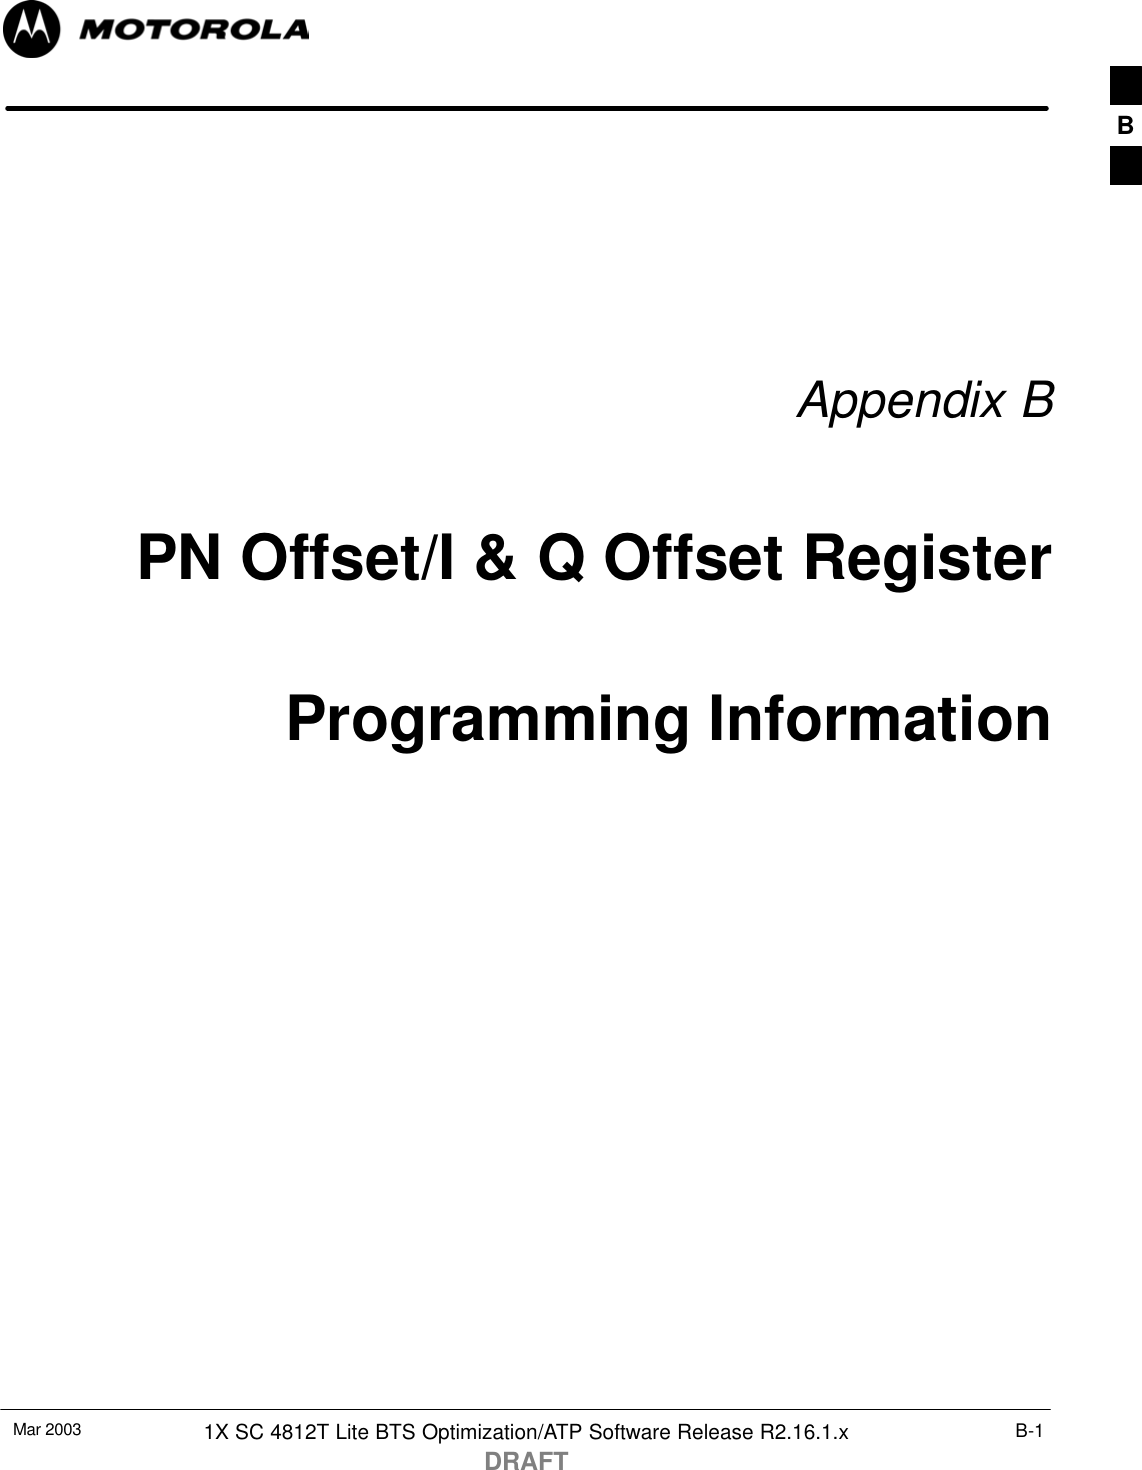 Mar 2003 1X SC 4812T Lite BTS Optimization/ATP Software Release R2.16.1.xDRAFTB-1Appendix BPN Offset/I &amp; Q Offset RegisterProgramming InformationB